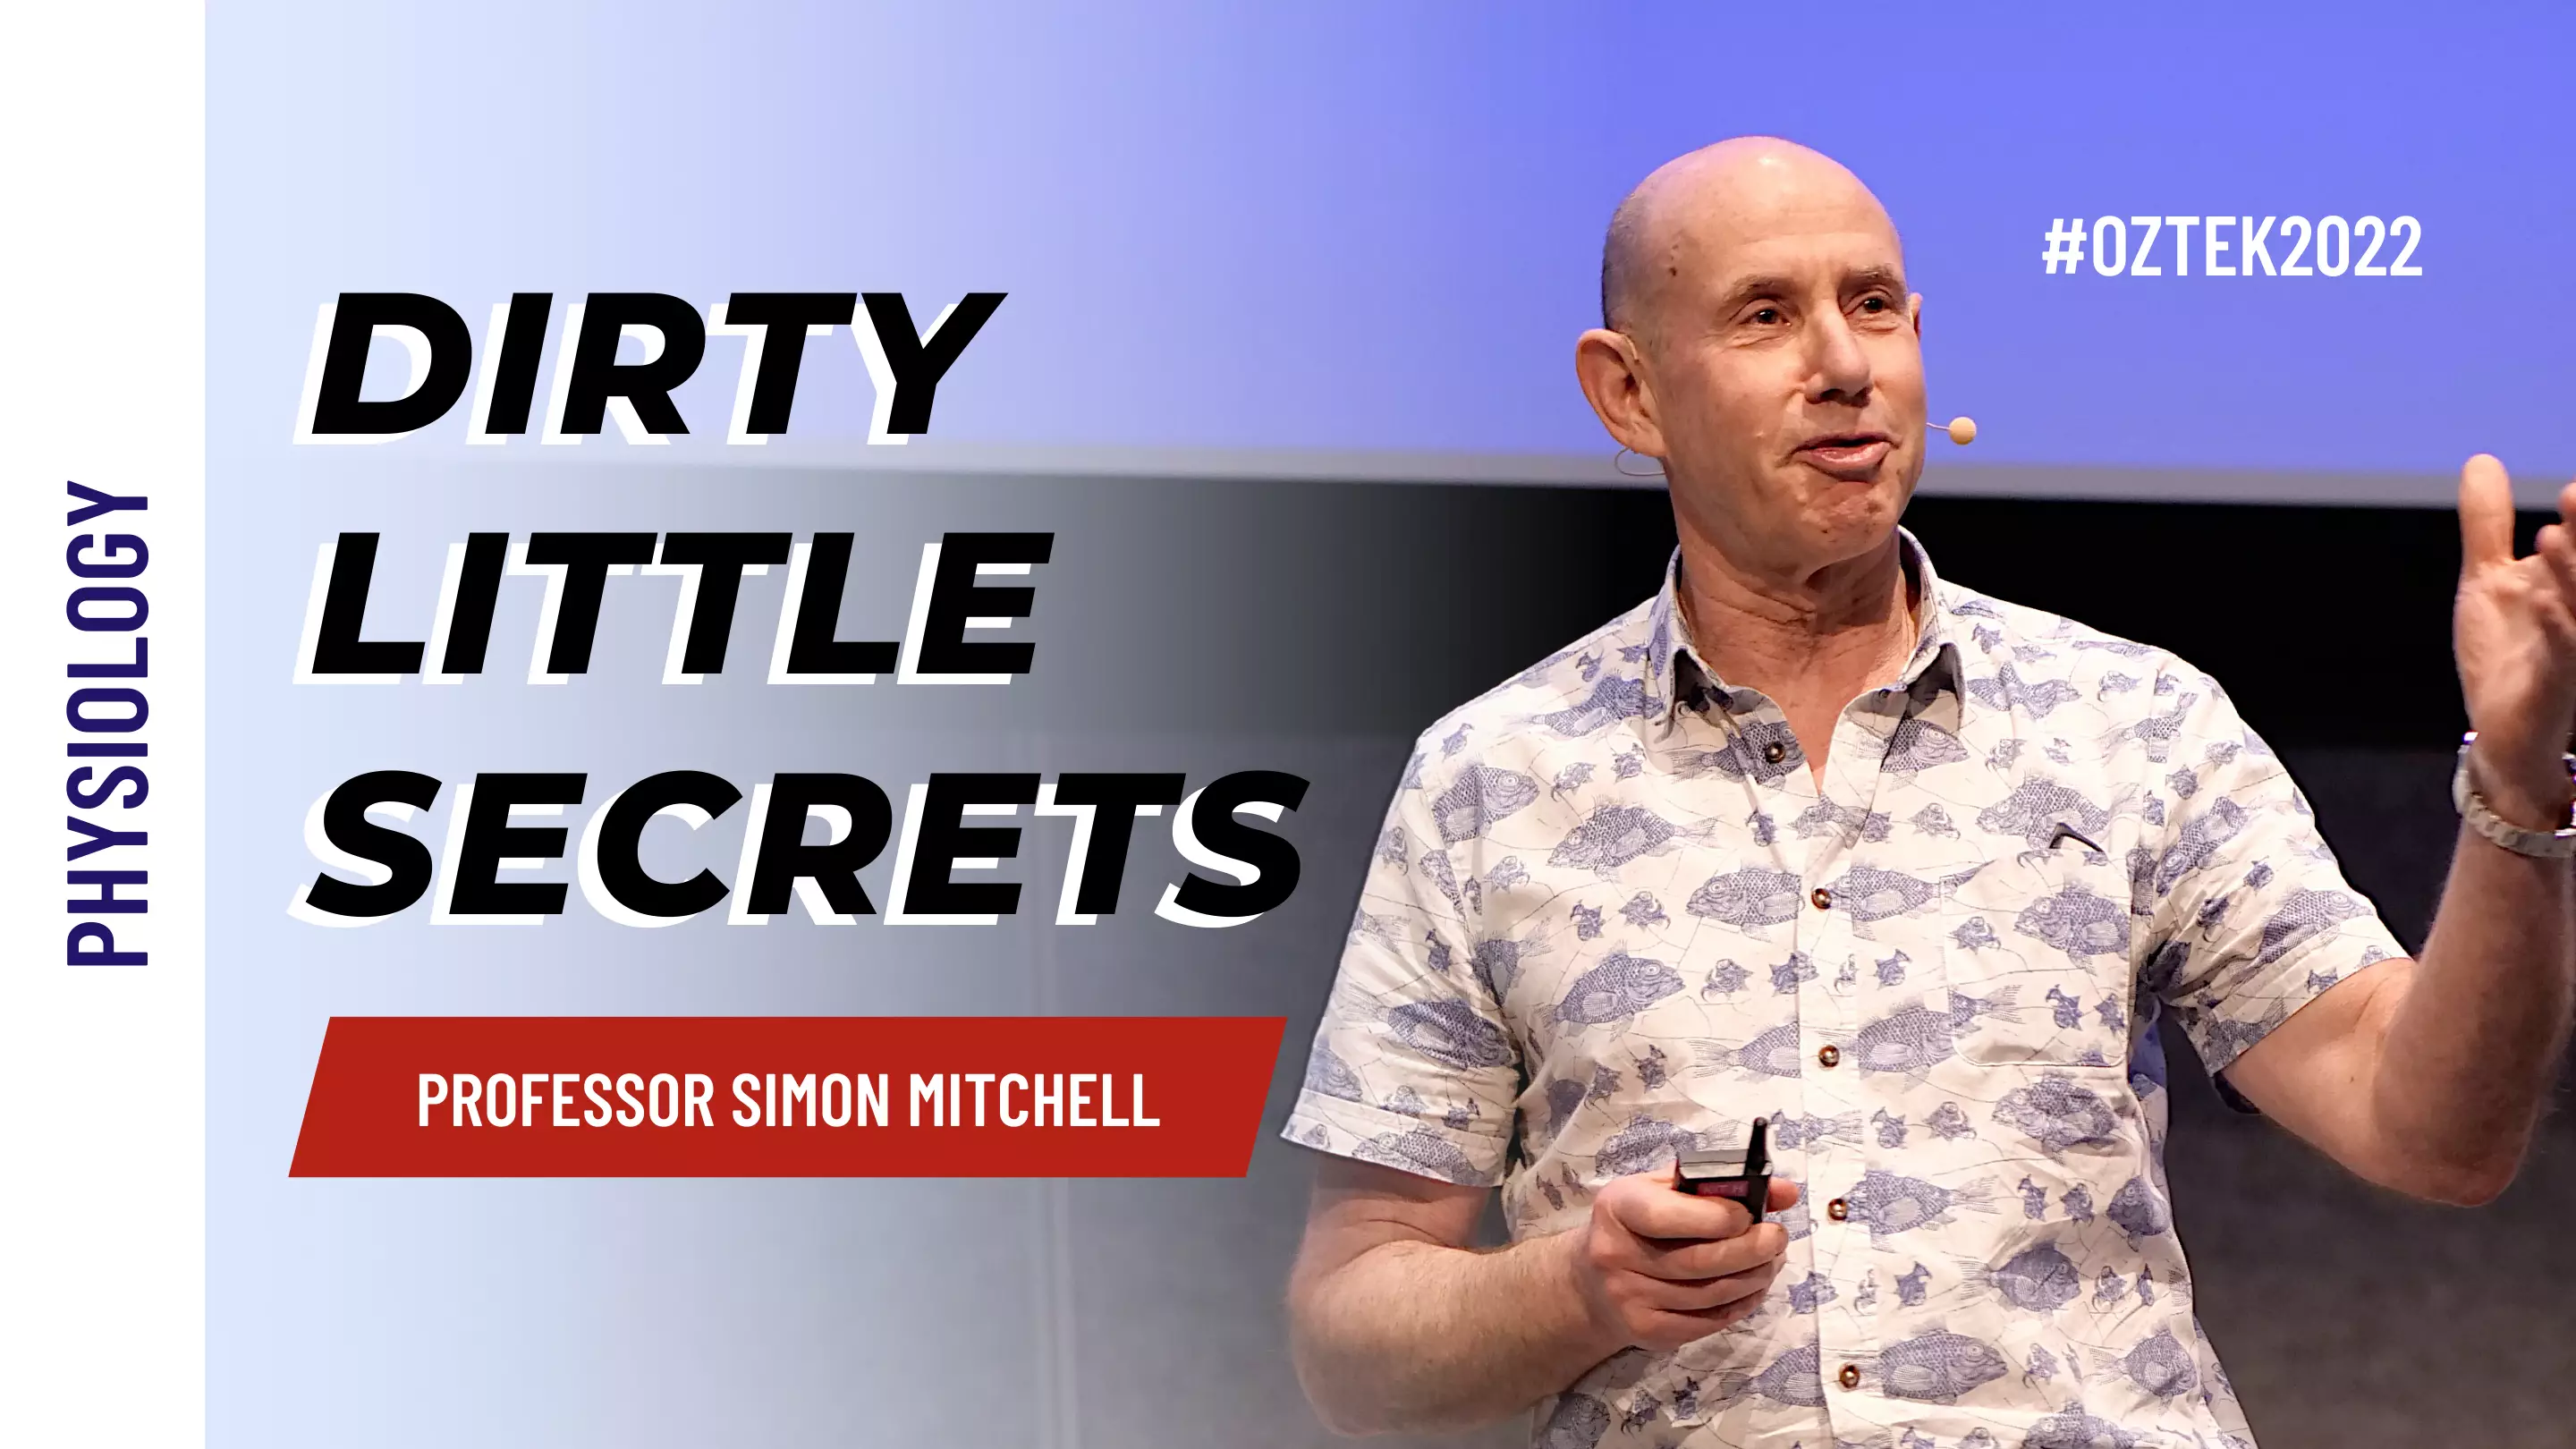 Professor Simon Mitchell - Dirty Little Secrets | OZTek2022 Physiology